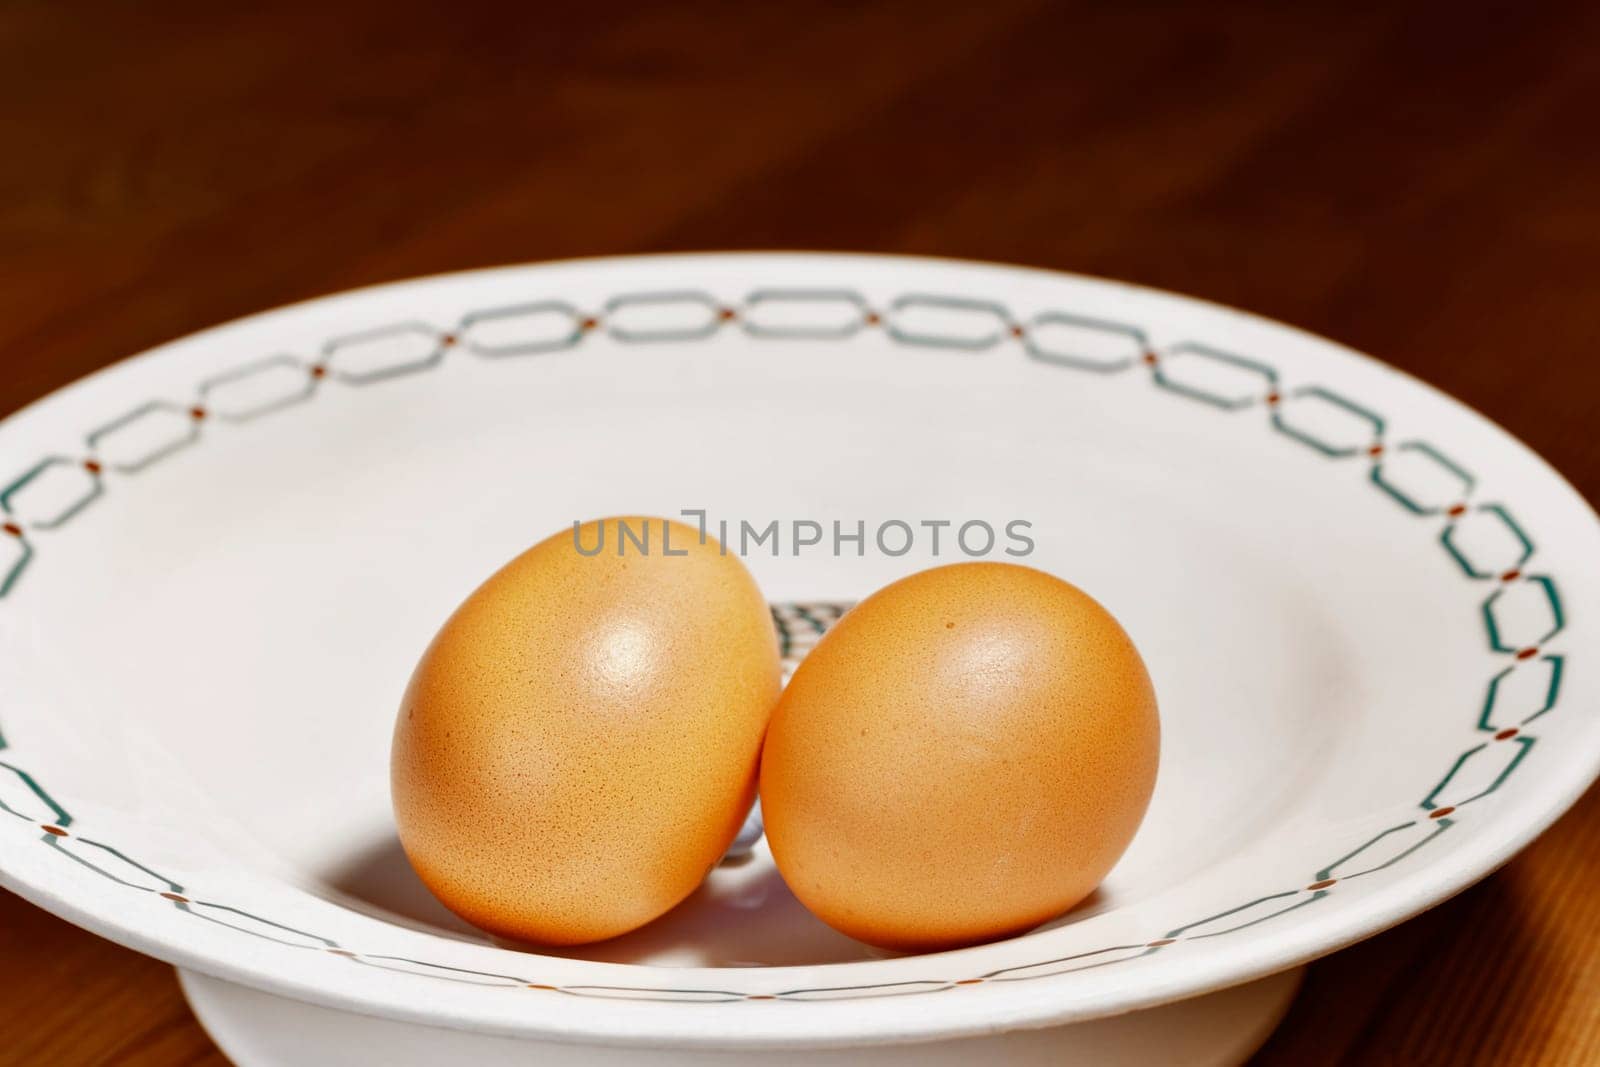 Eggs on plate detail by victimewalker